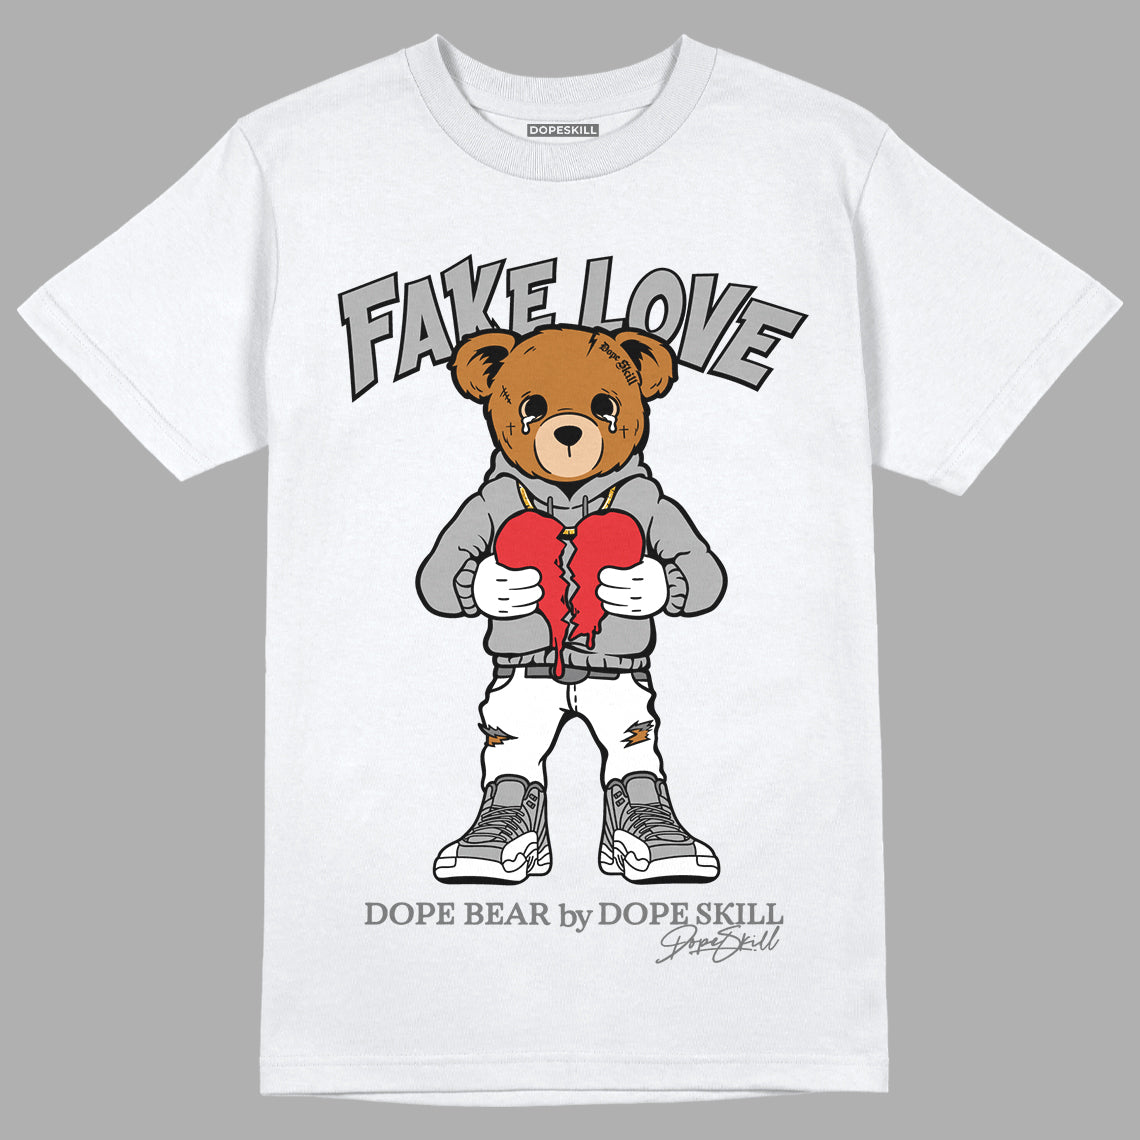 Jordan 12 Stealth DopeSkill T-Shirt Fake Love Graphic - White 